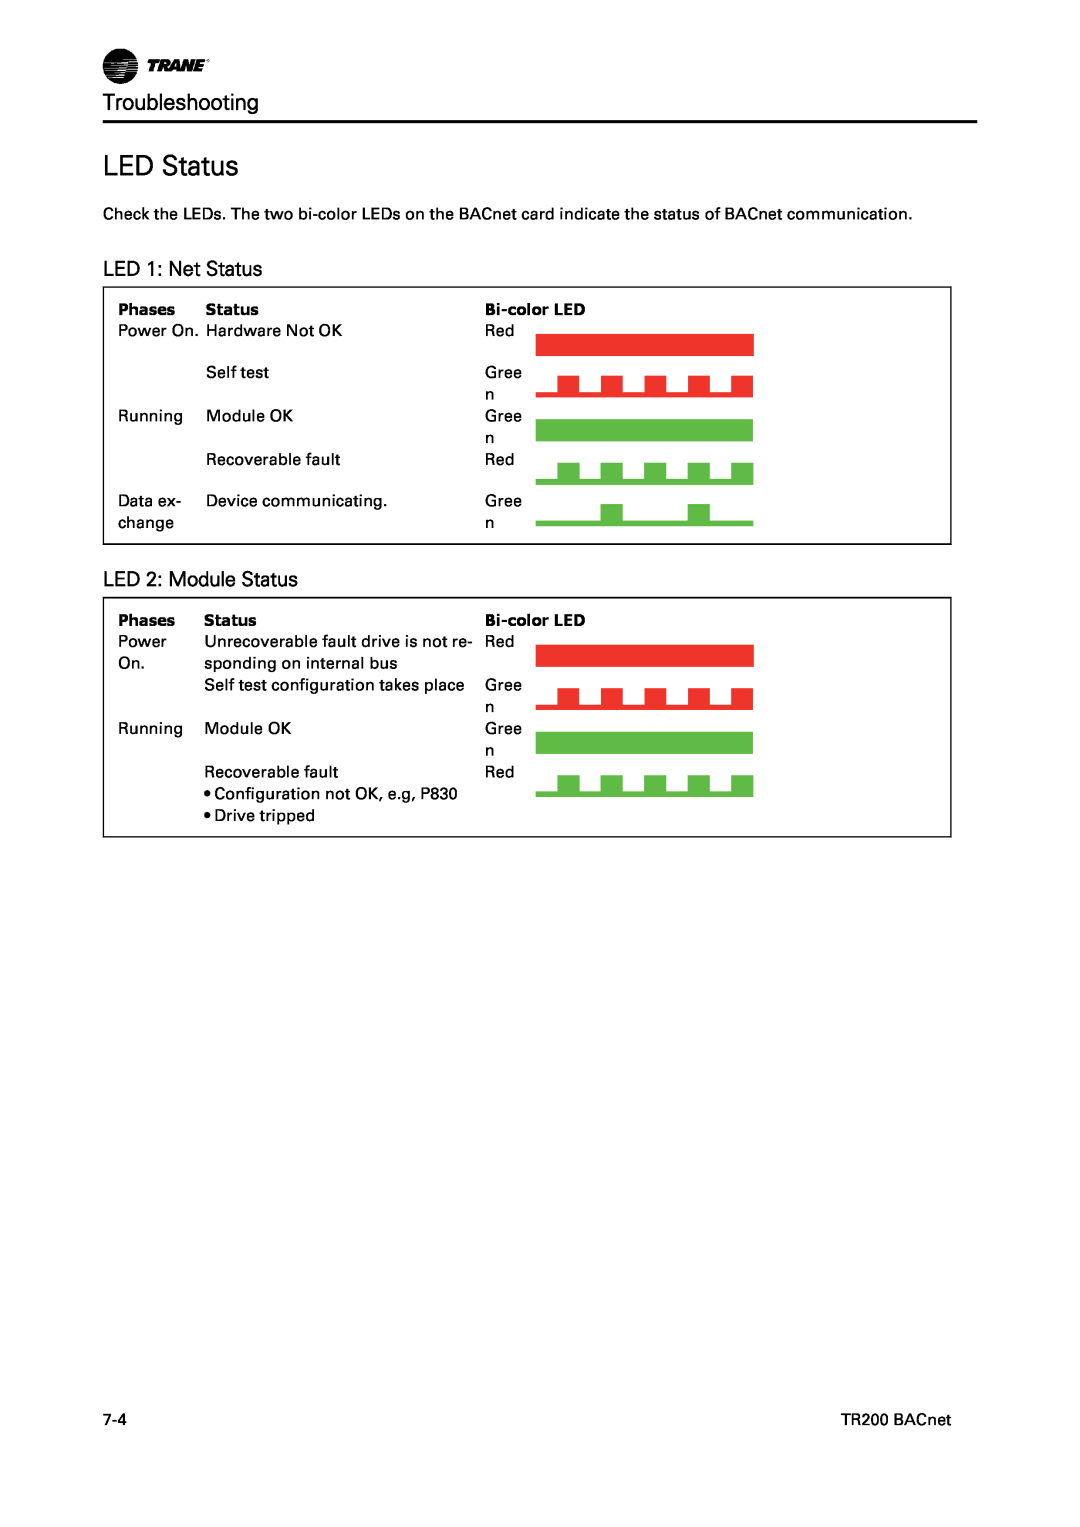 Trane BACnet Option Module, TR200 instruction manual LED 1 Net Status, LED 2 Module Status, Phases Status, Bi-colorLED 